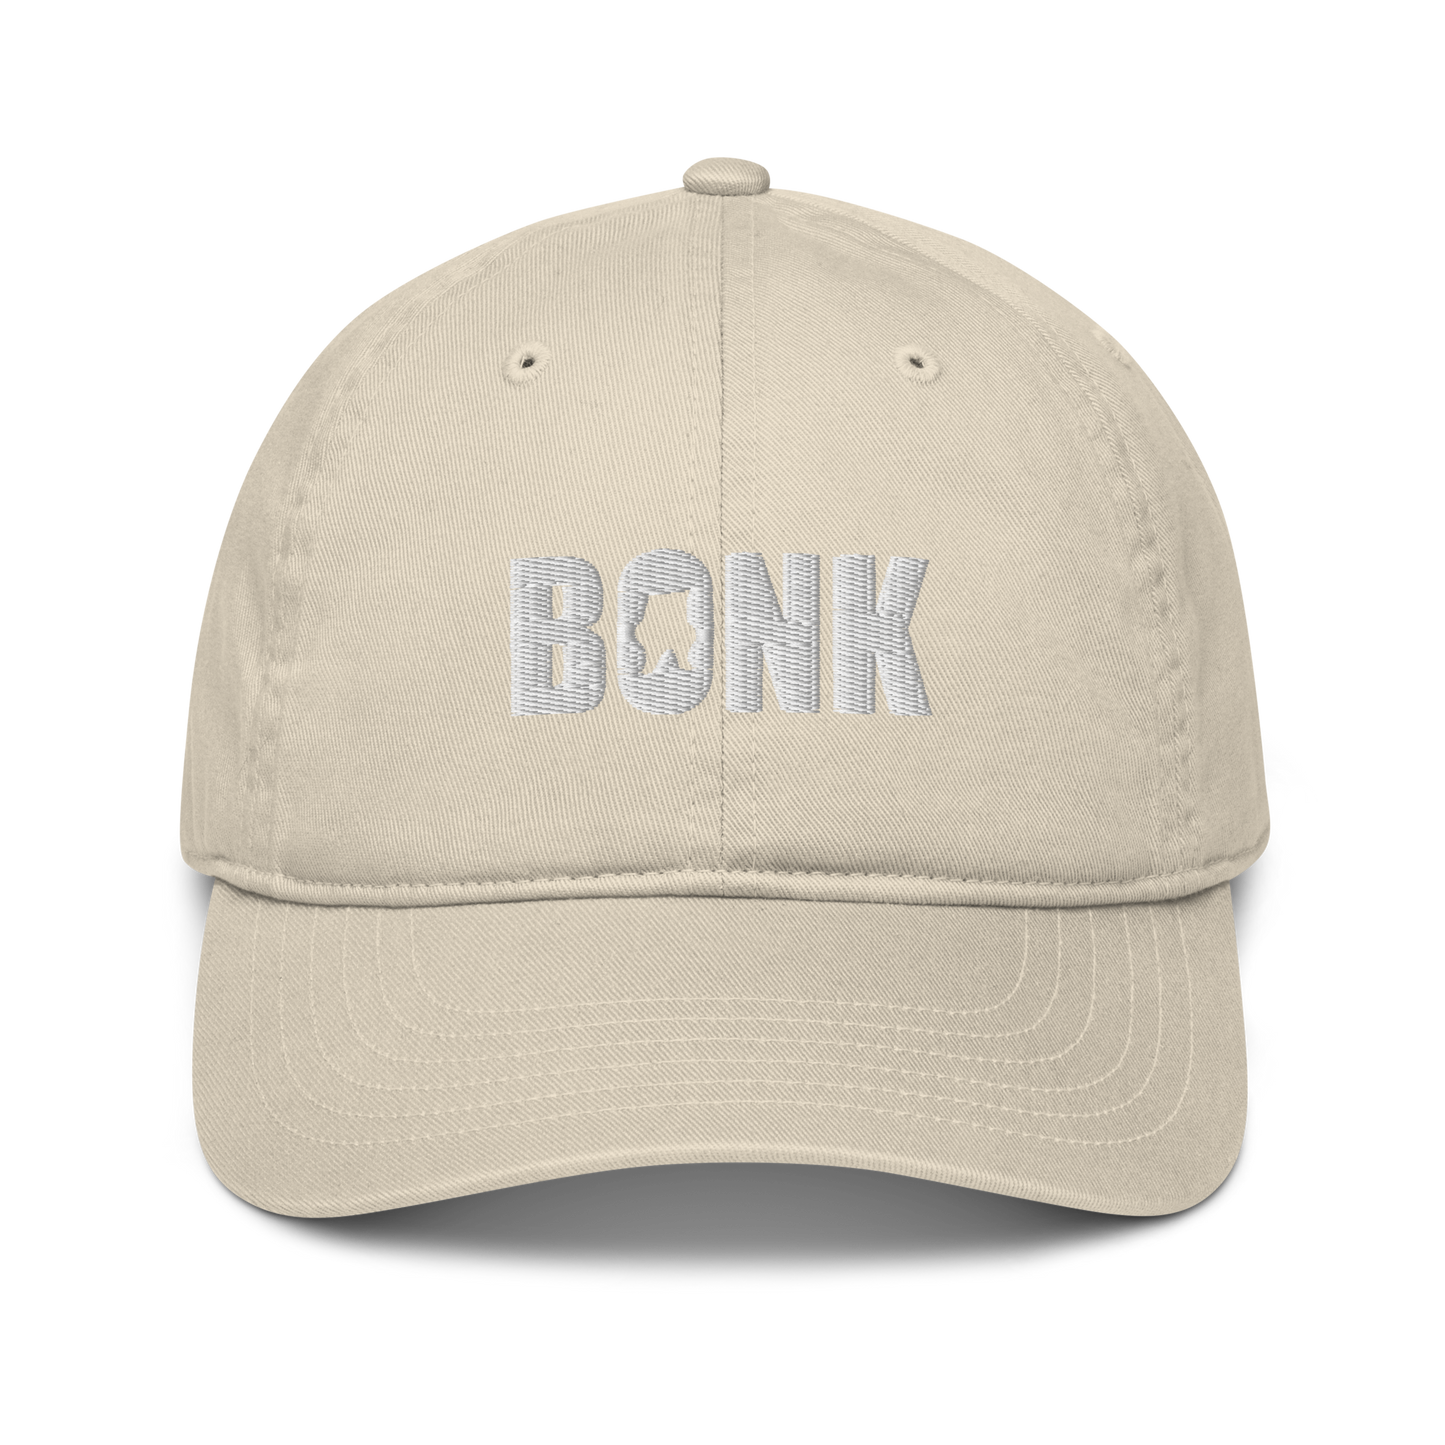 NAFO Bonk Embroidered Dad Hat